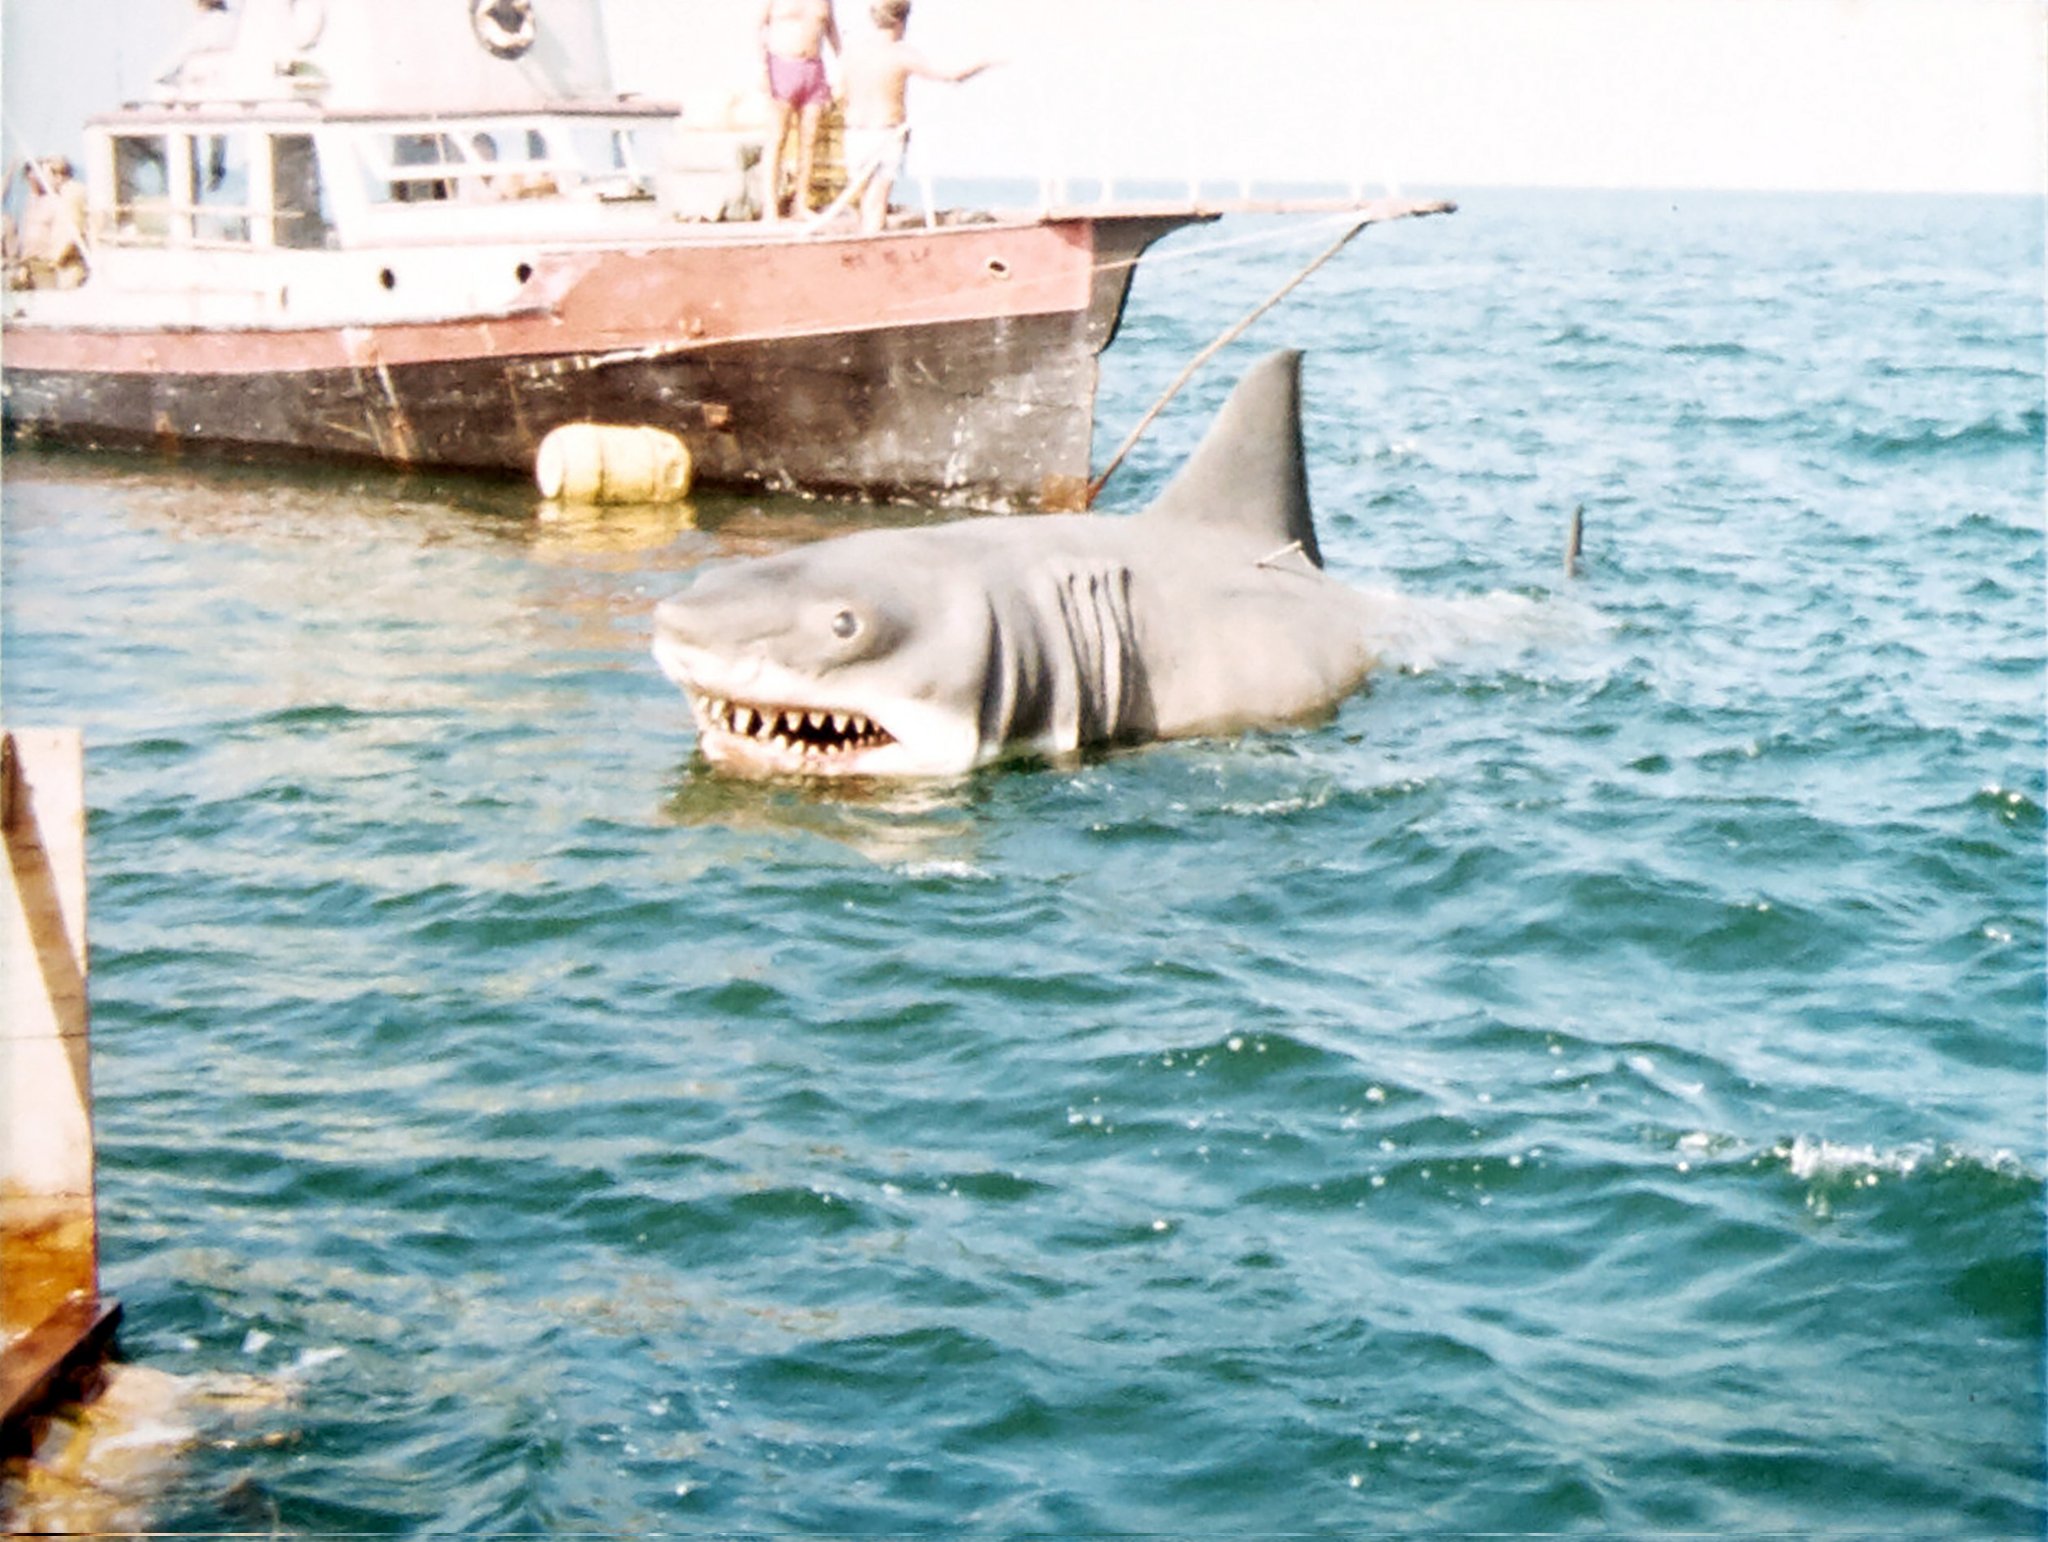 Taku on X: Jaws Mechanical Shark from each movie Jaws (1975